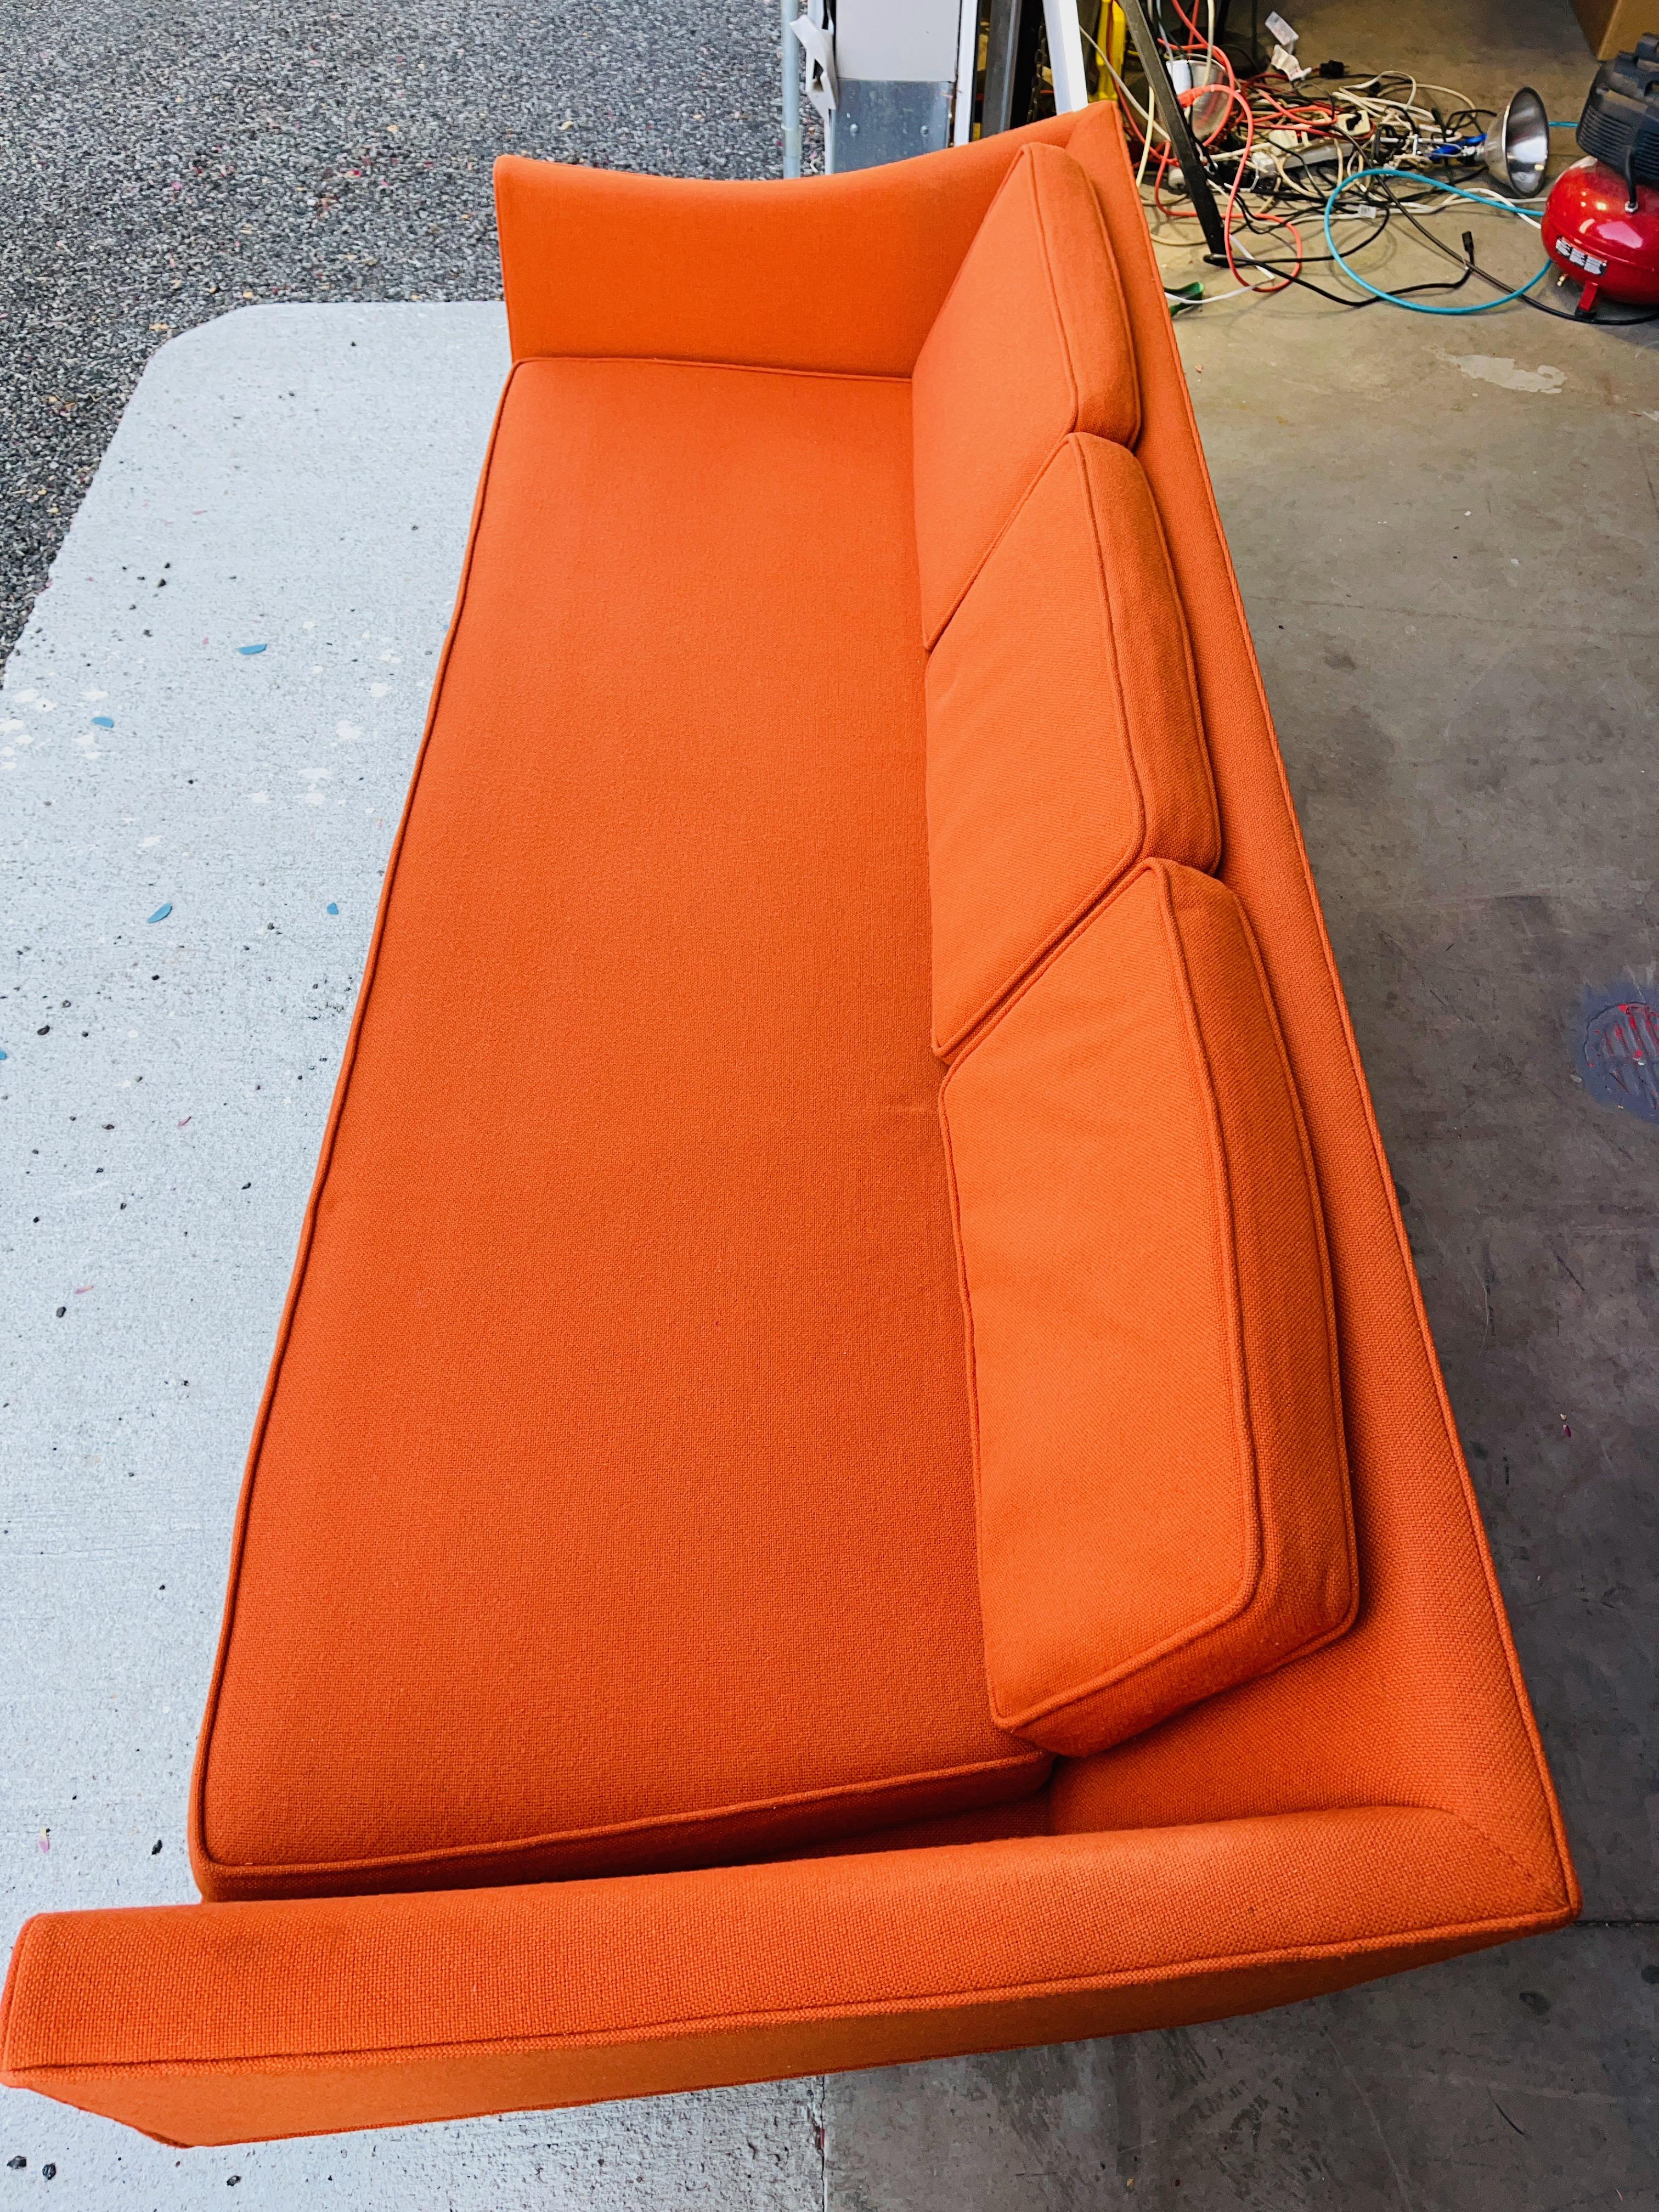 Harvey Probber Sloped Arm Sofa For Sale 3